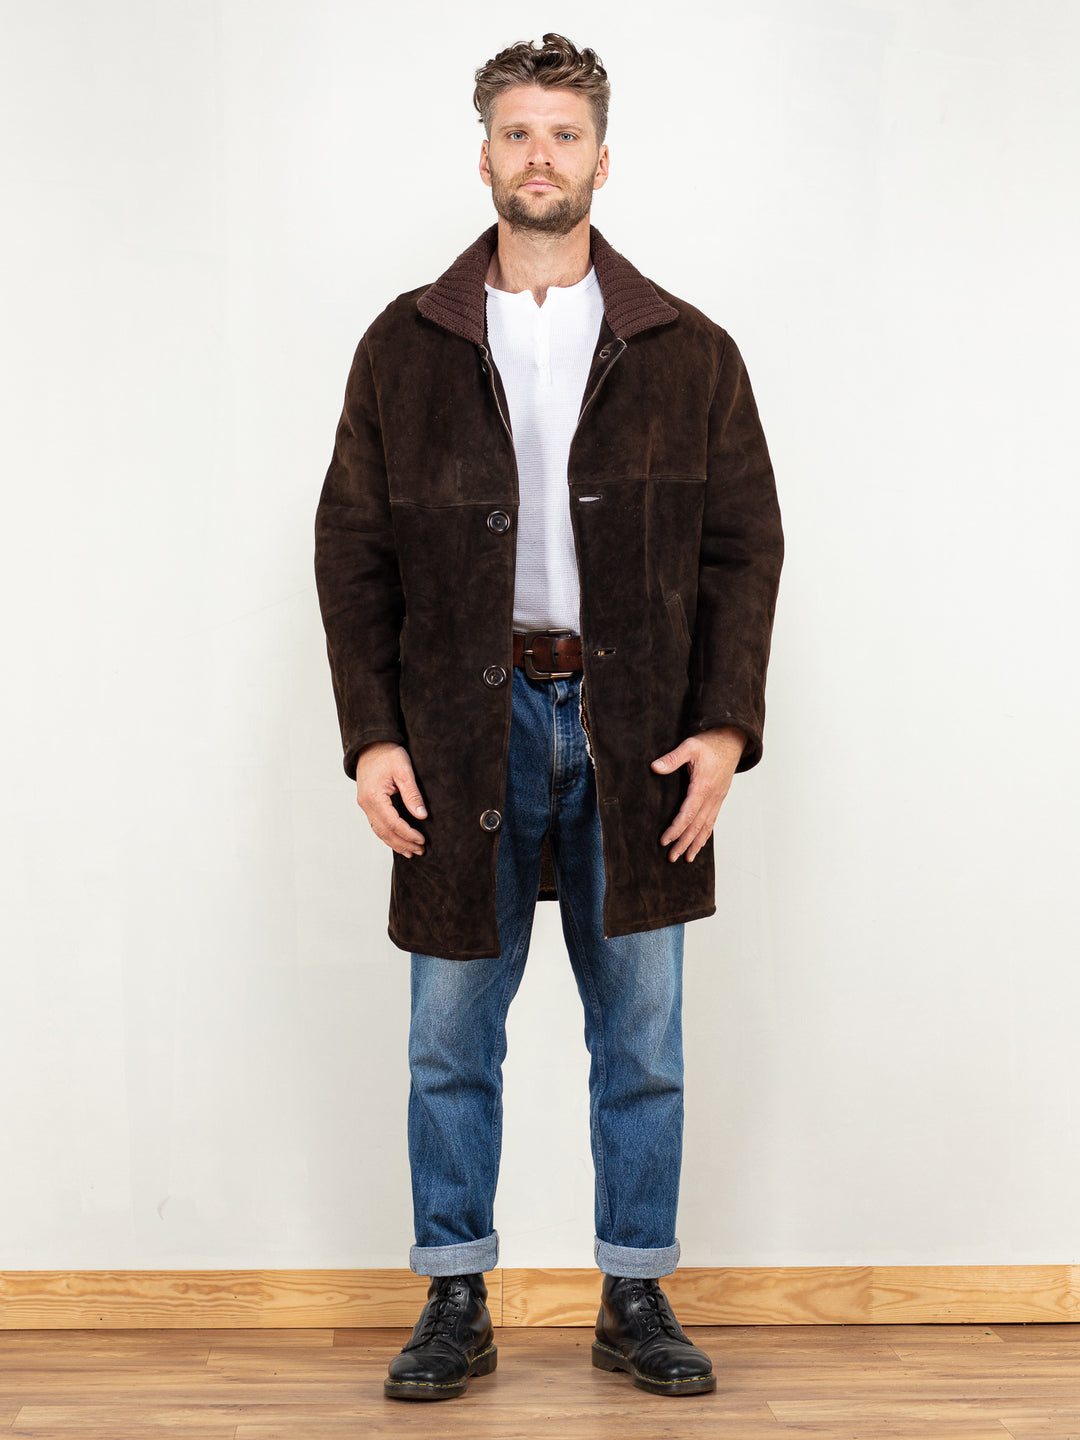 Vintage 80's Men Sheepskin Coat in Brown